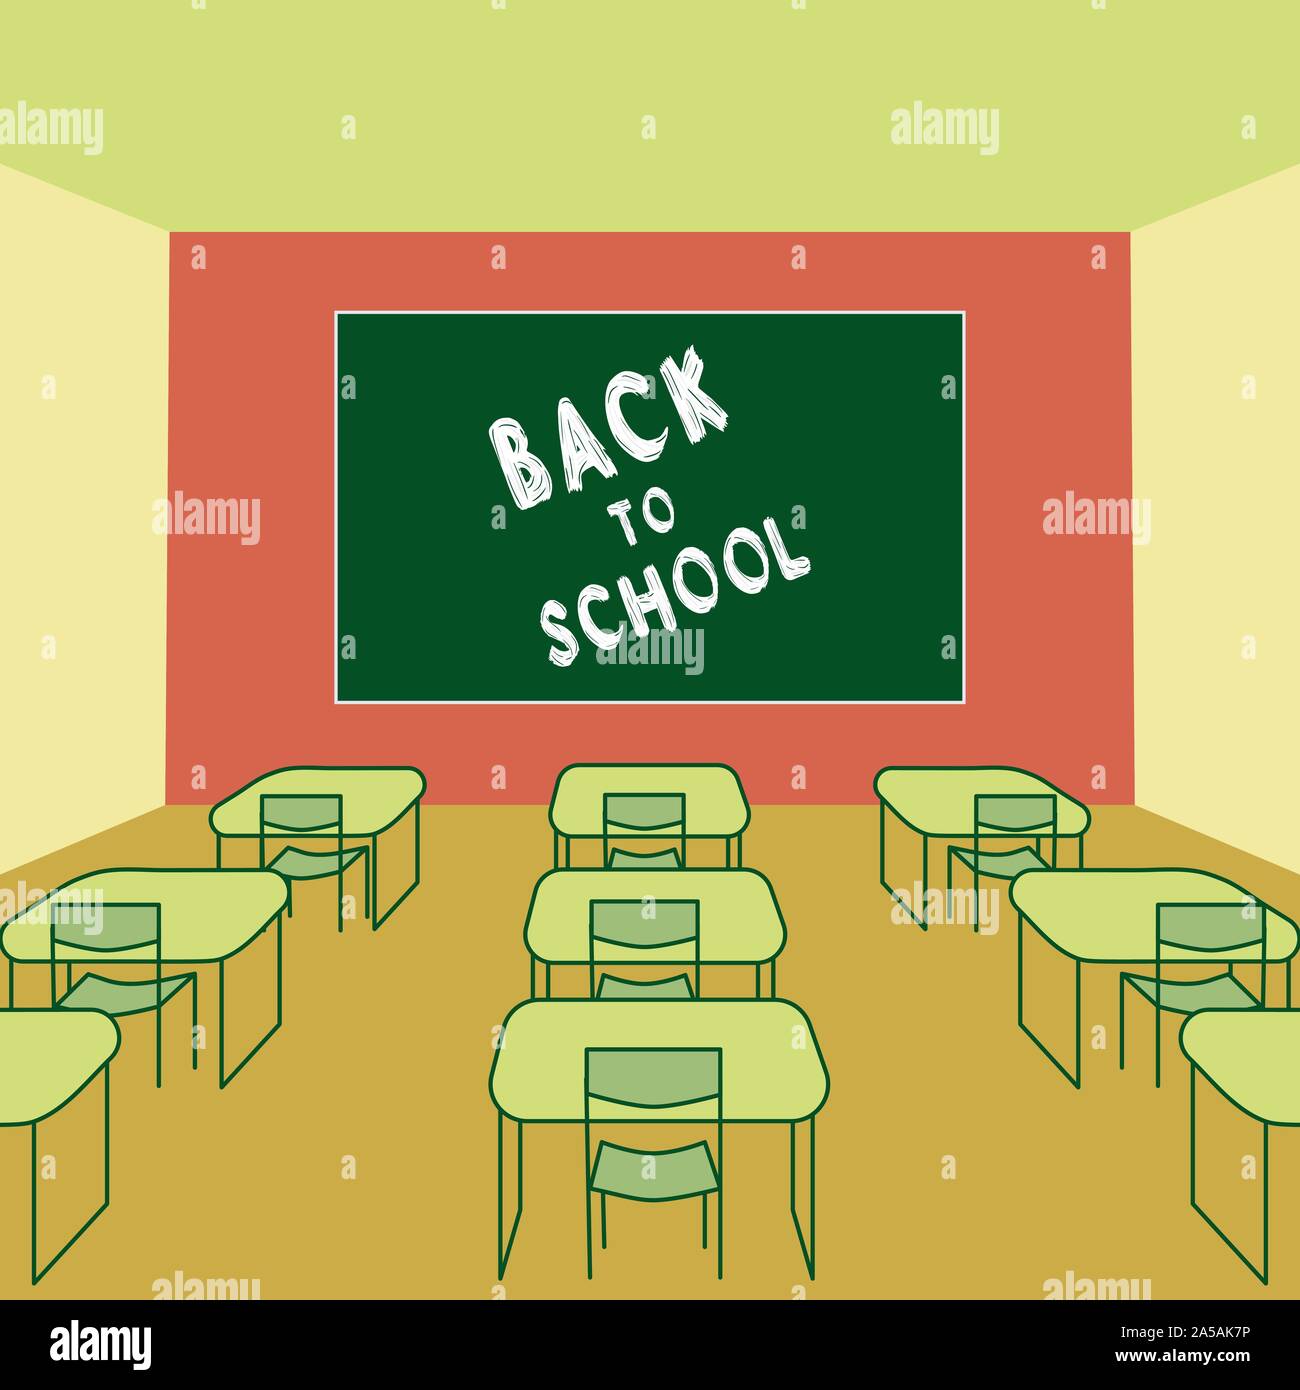 Back To School Text Drawing Chalk In Blackboard Classroom Interior